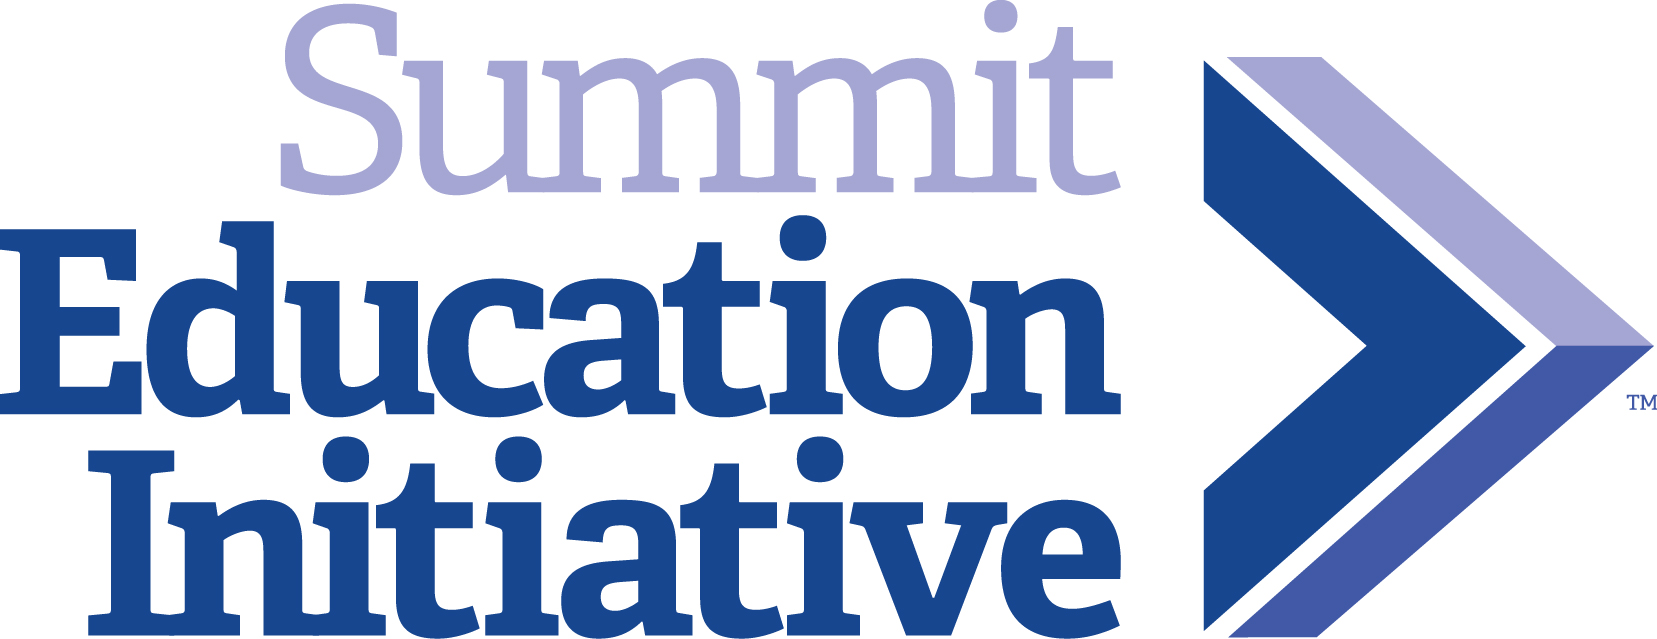 Summit Education Initiative